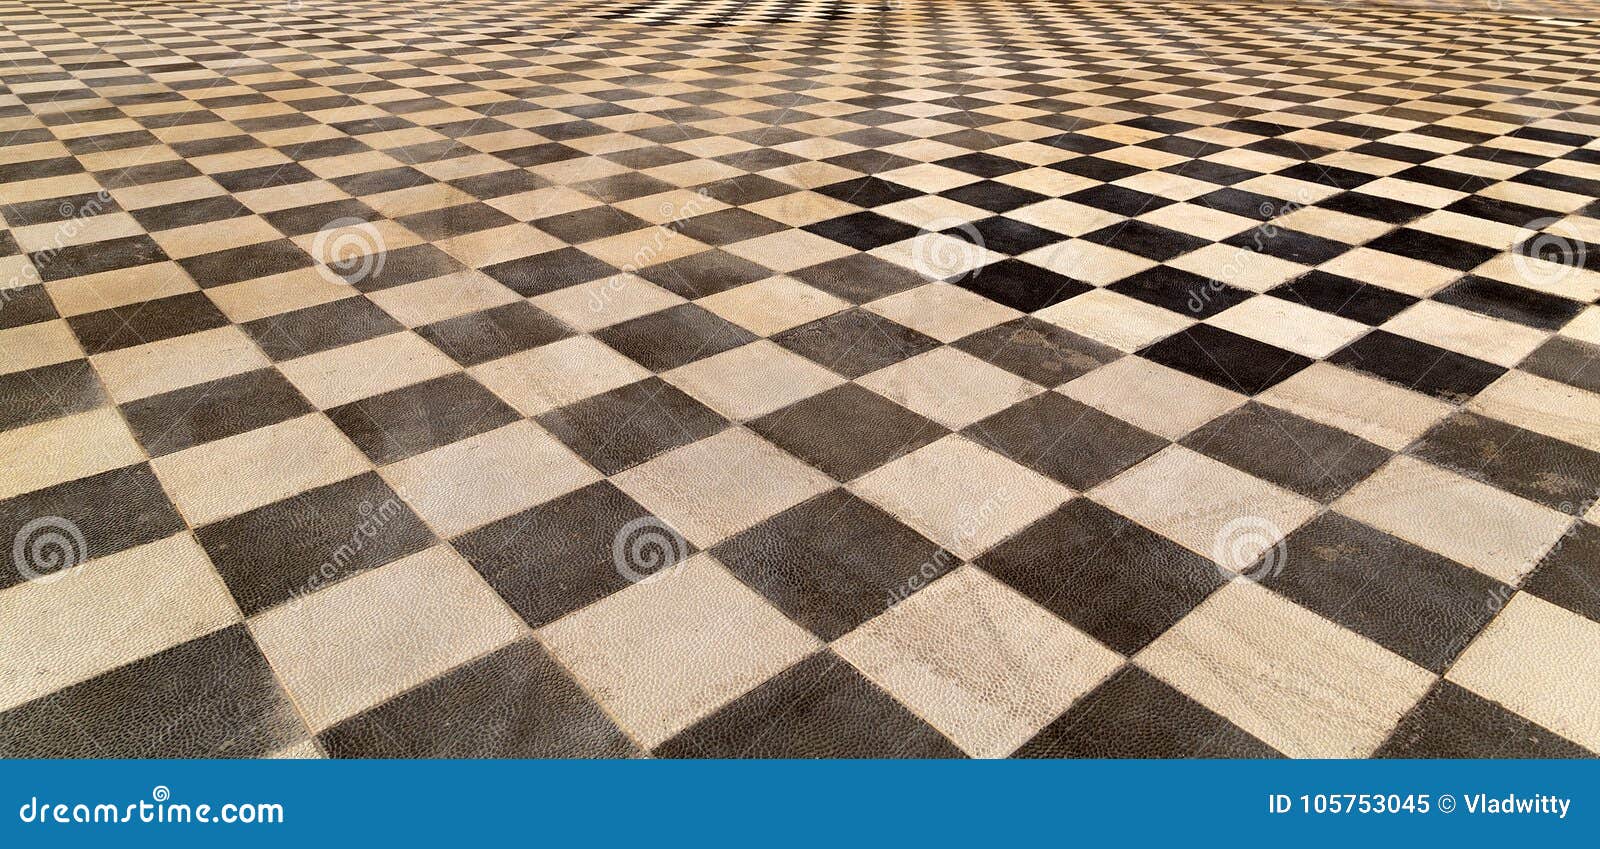 White Black Tile Floor Texture Pattern Background Stock Image - Image ...